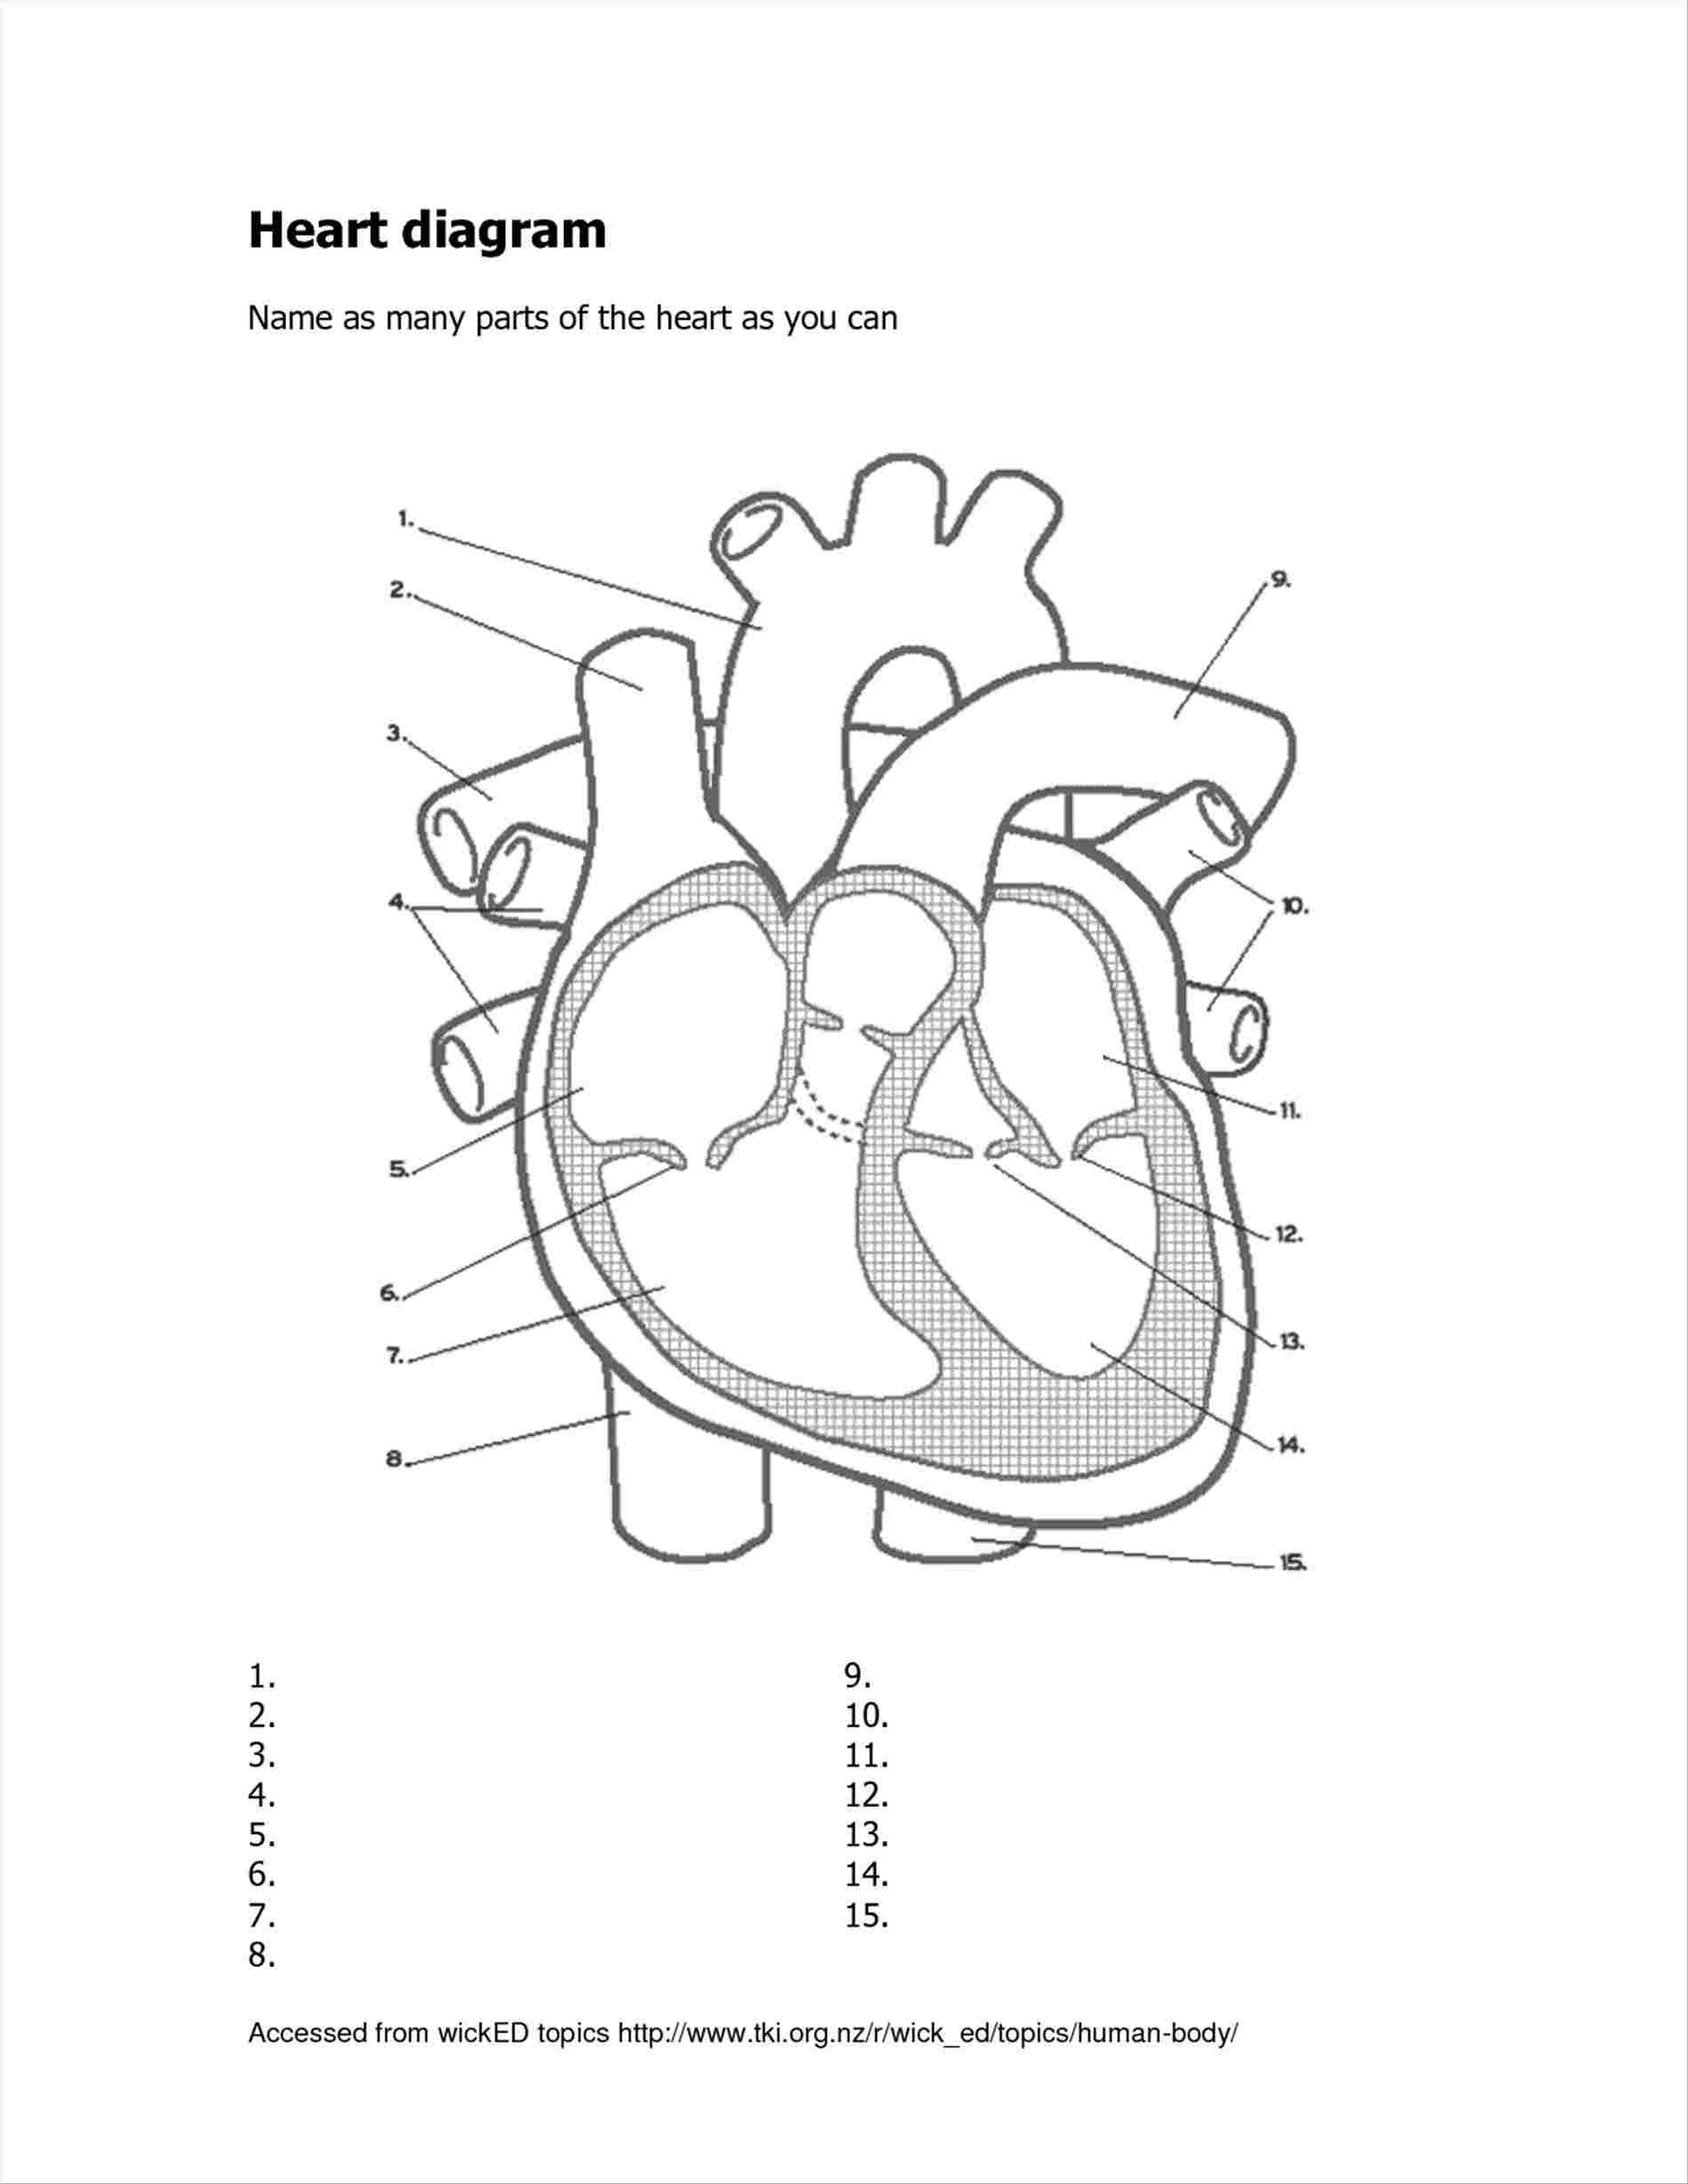 Heart Diagram Labeled Seerhbodytomycom A Heart Labeled Diagram Labeled Diagram Of The